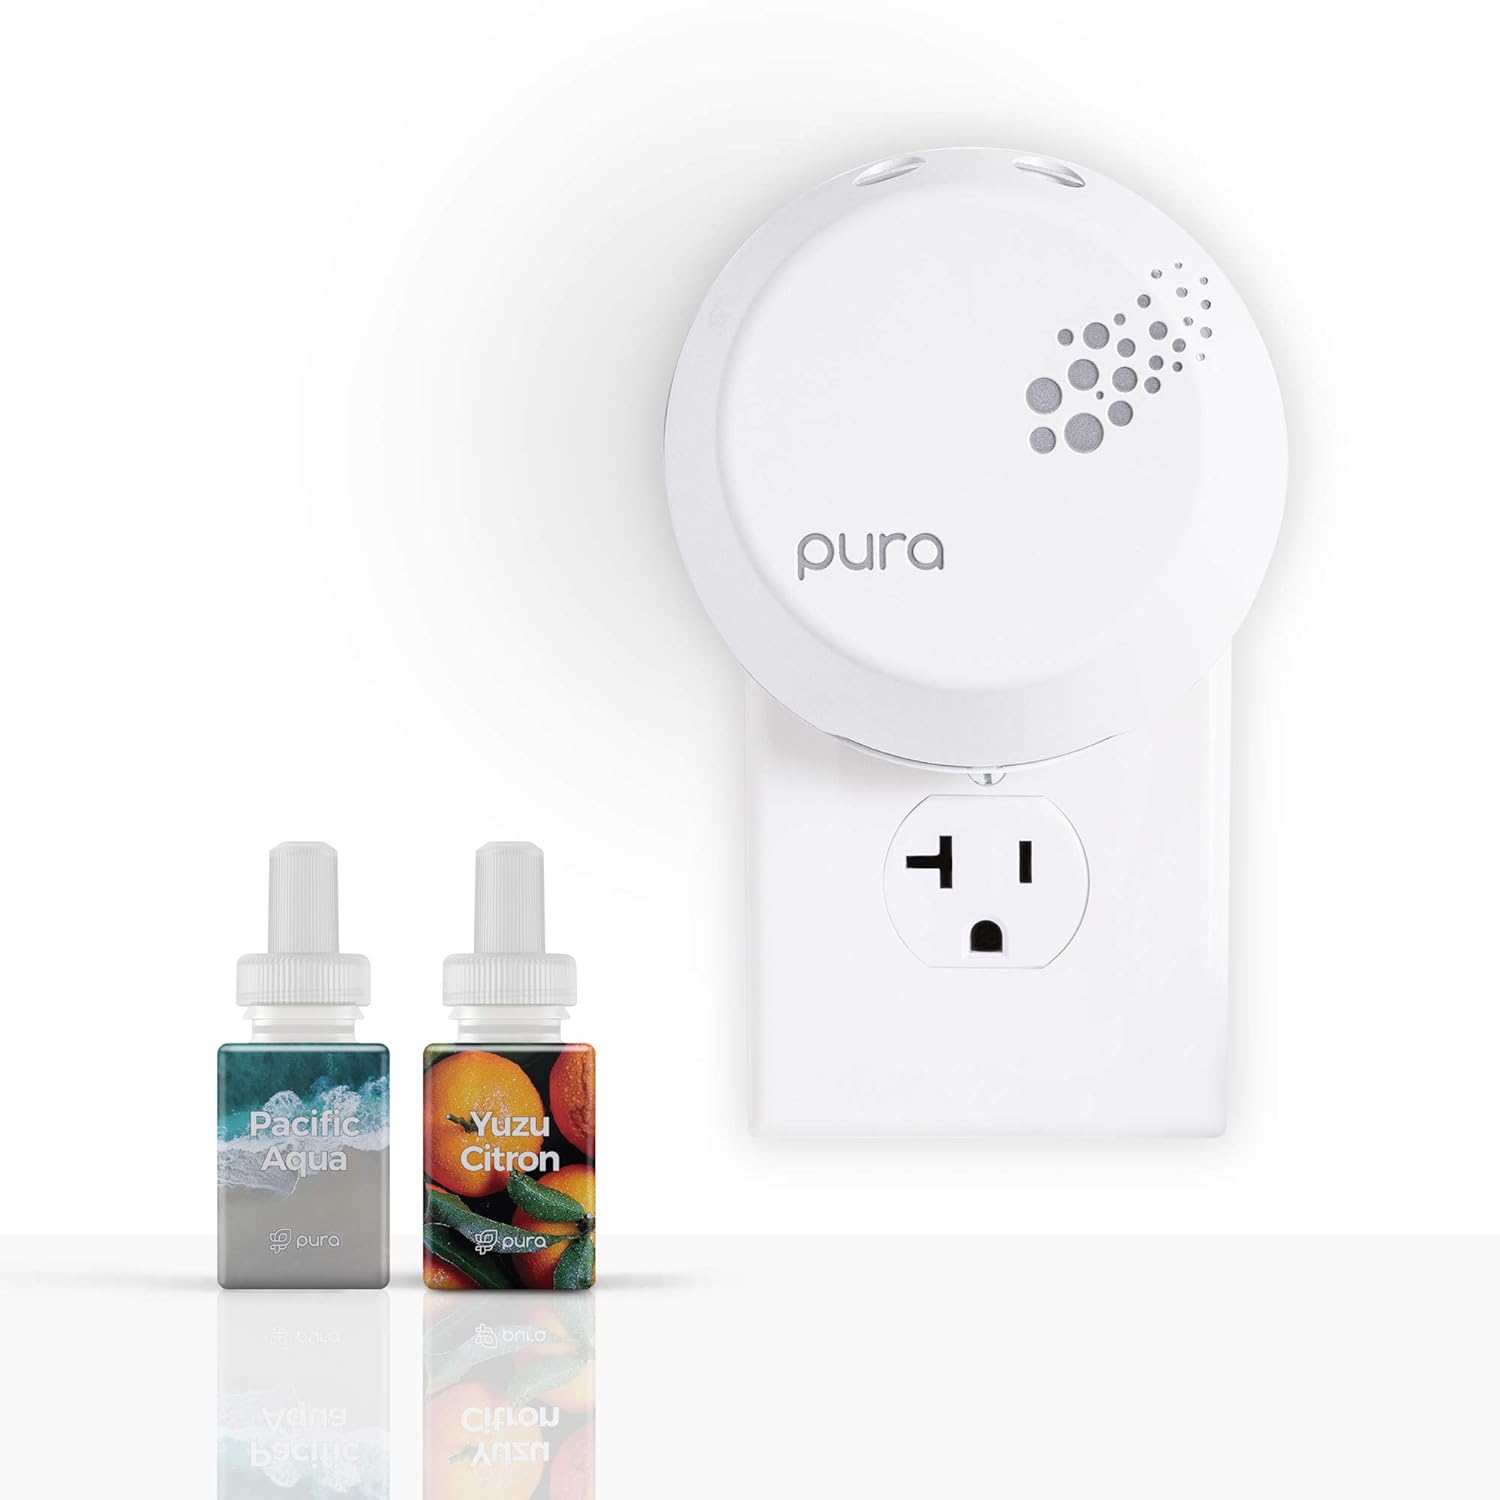 Pura - Smart Home Fragrance Device Starter Set V3 - Scent Diffuser for Homes, Bedrooms & Living Rooms - Includes Fragrance Aroma Diffuser & Two Fragrances - Pacific Aqua and Yuzu Citron